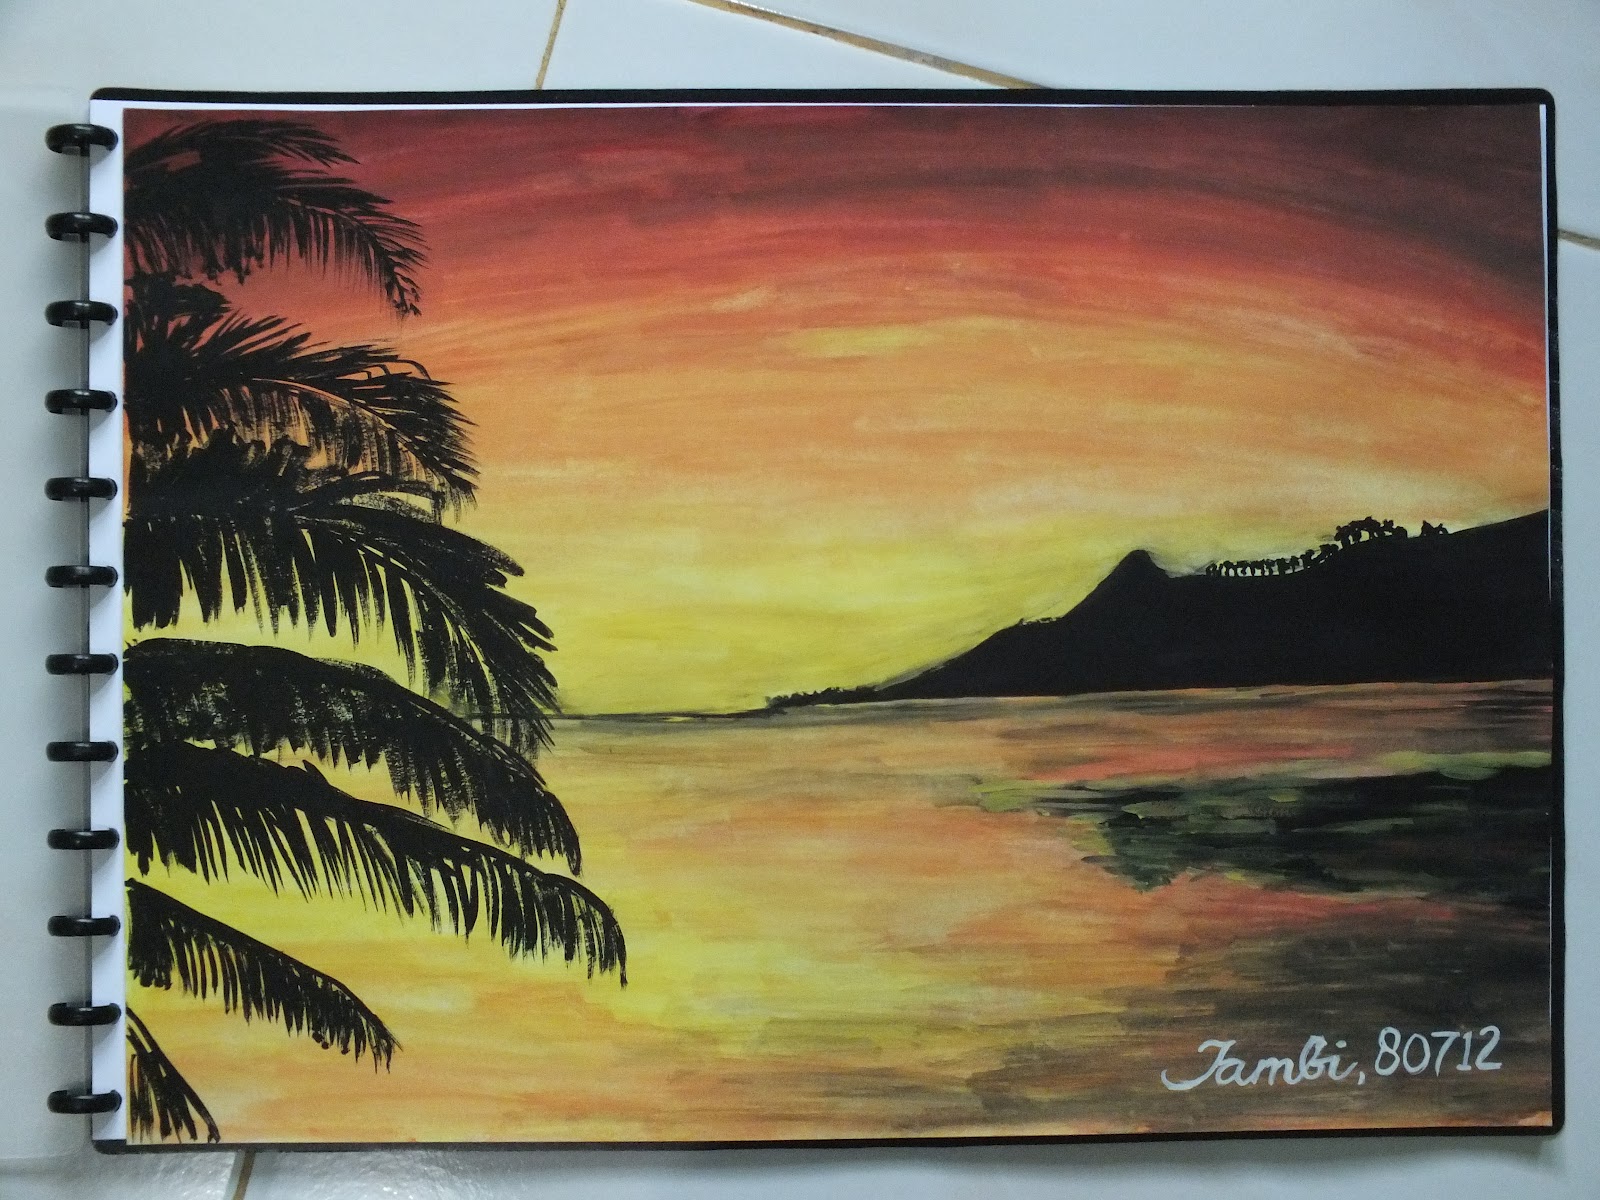 lukisan sunset di pantai - Jurnal Ibuk Dita